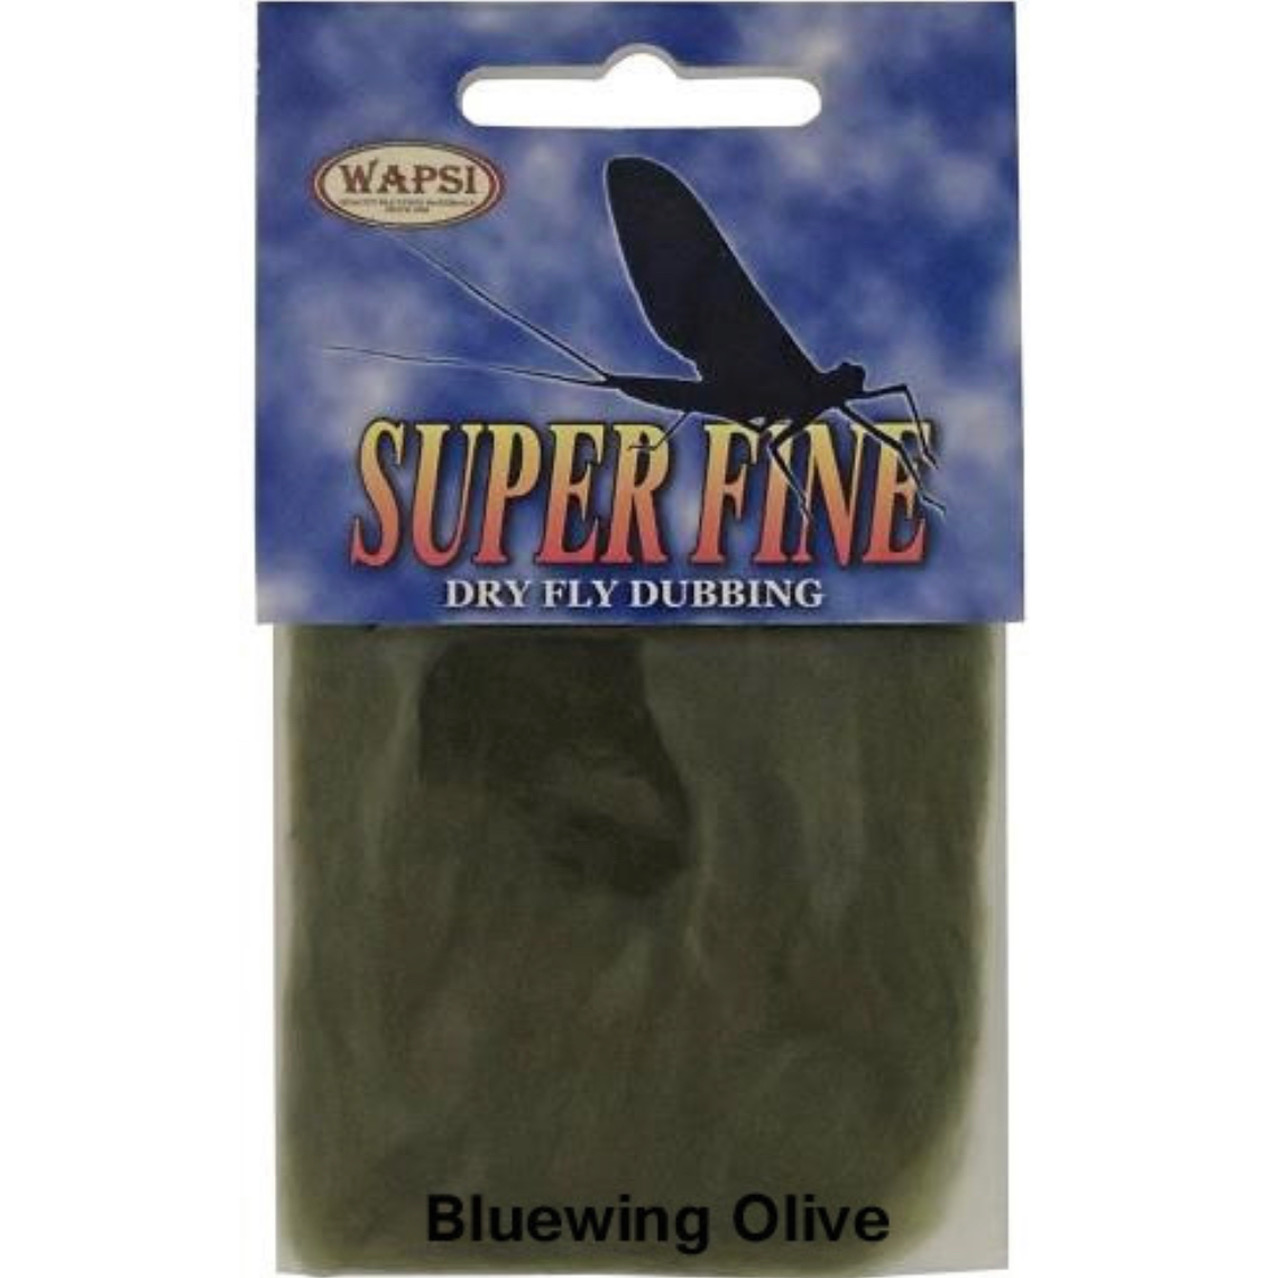 Wapsi Super Fine Dubbing - Blue Wing Olive